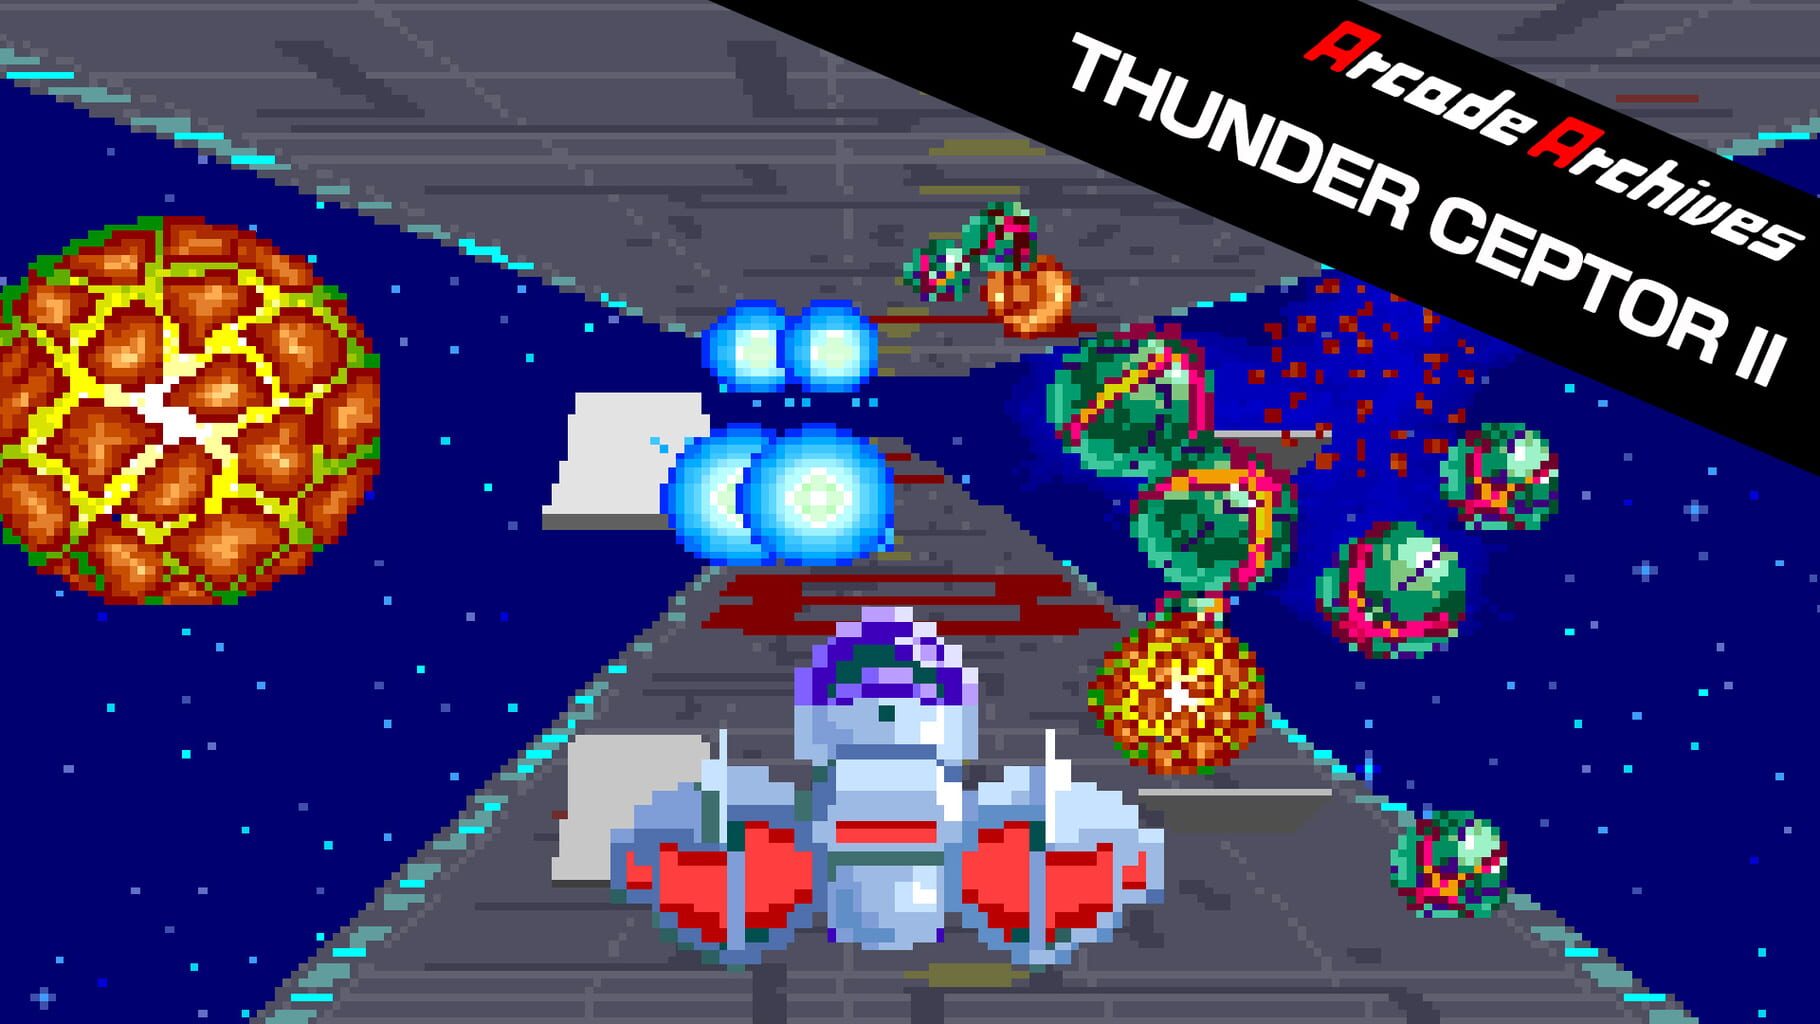 Arte - Arcade Archives: Thunder Ceptor II